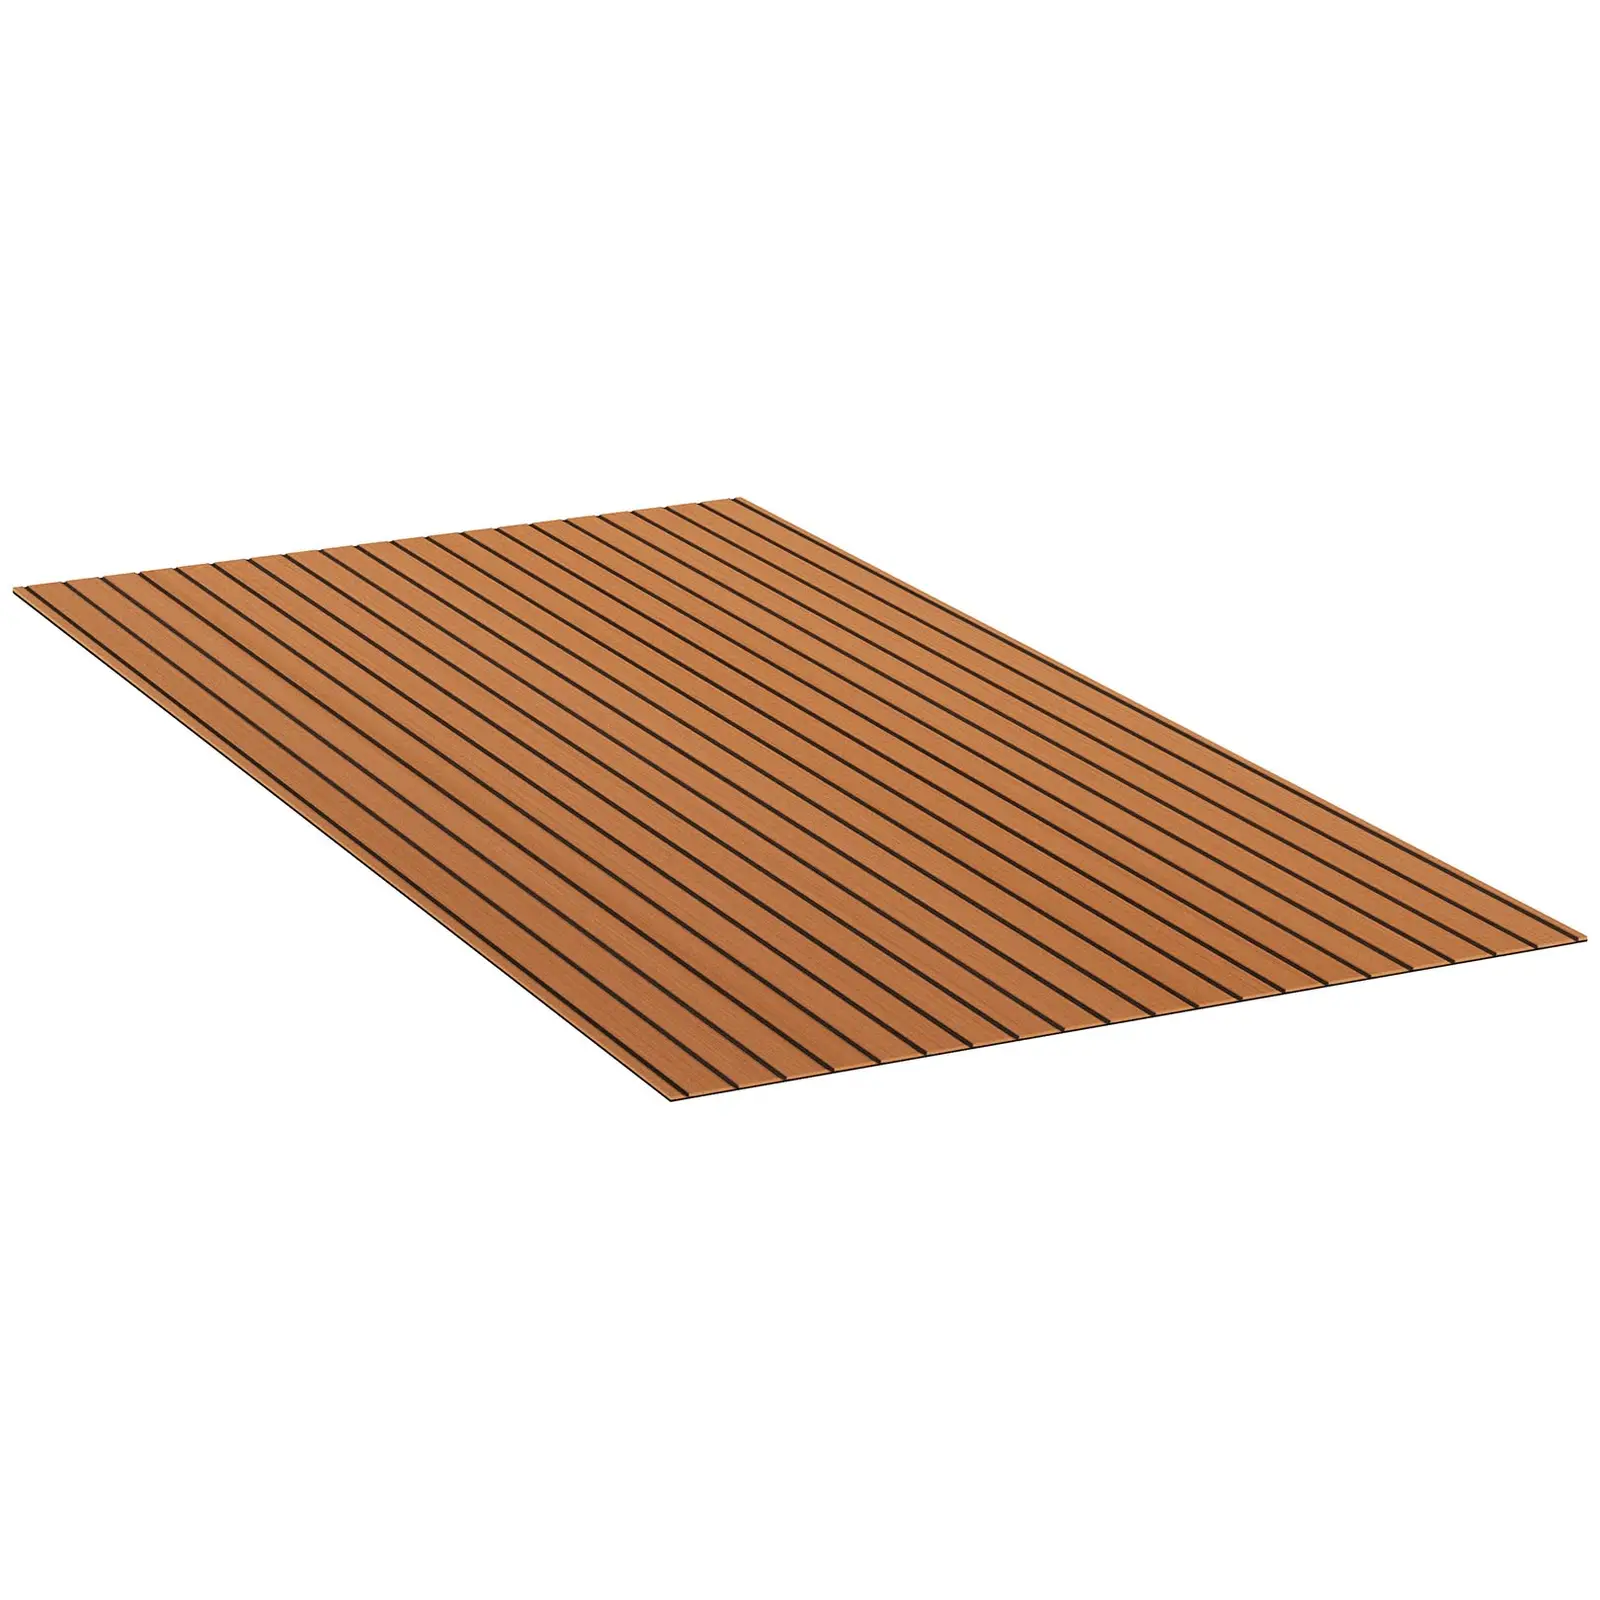 Valčių grindys - 240 x 120 cm - rudos/juodos spalvos